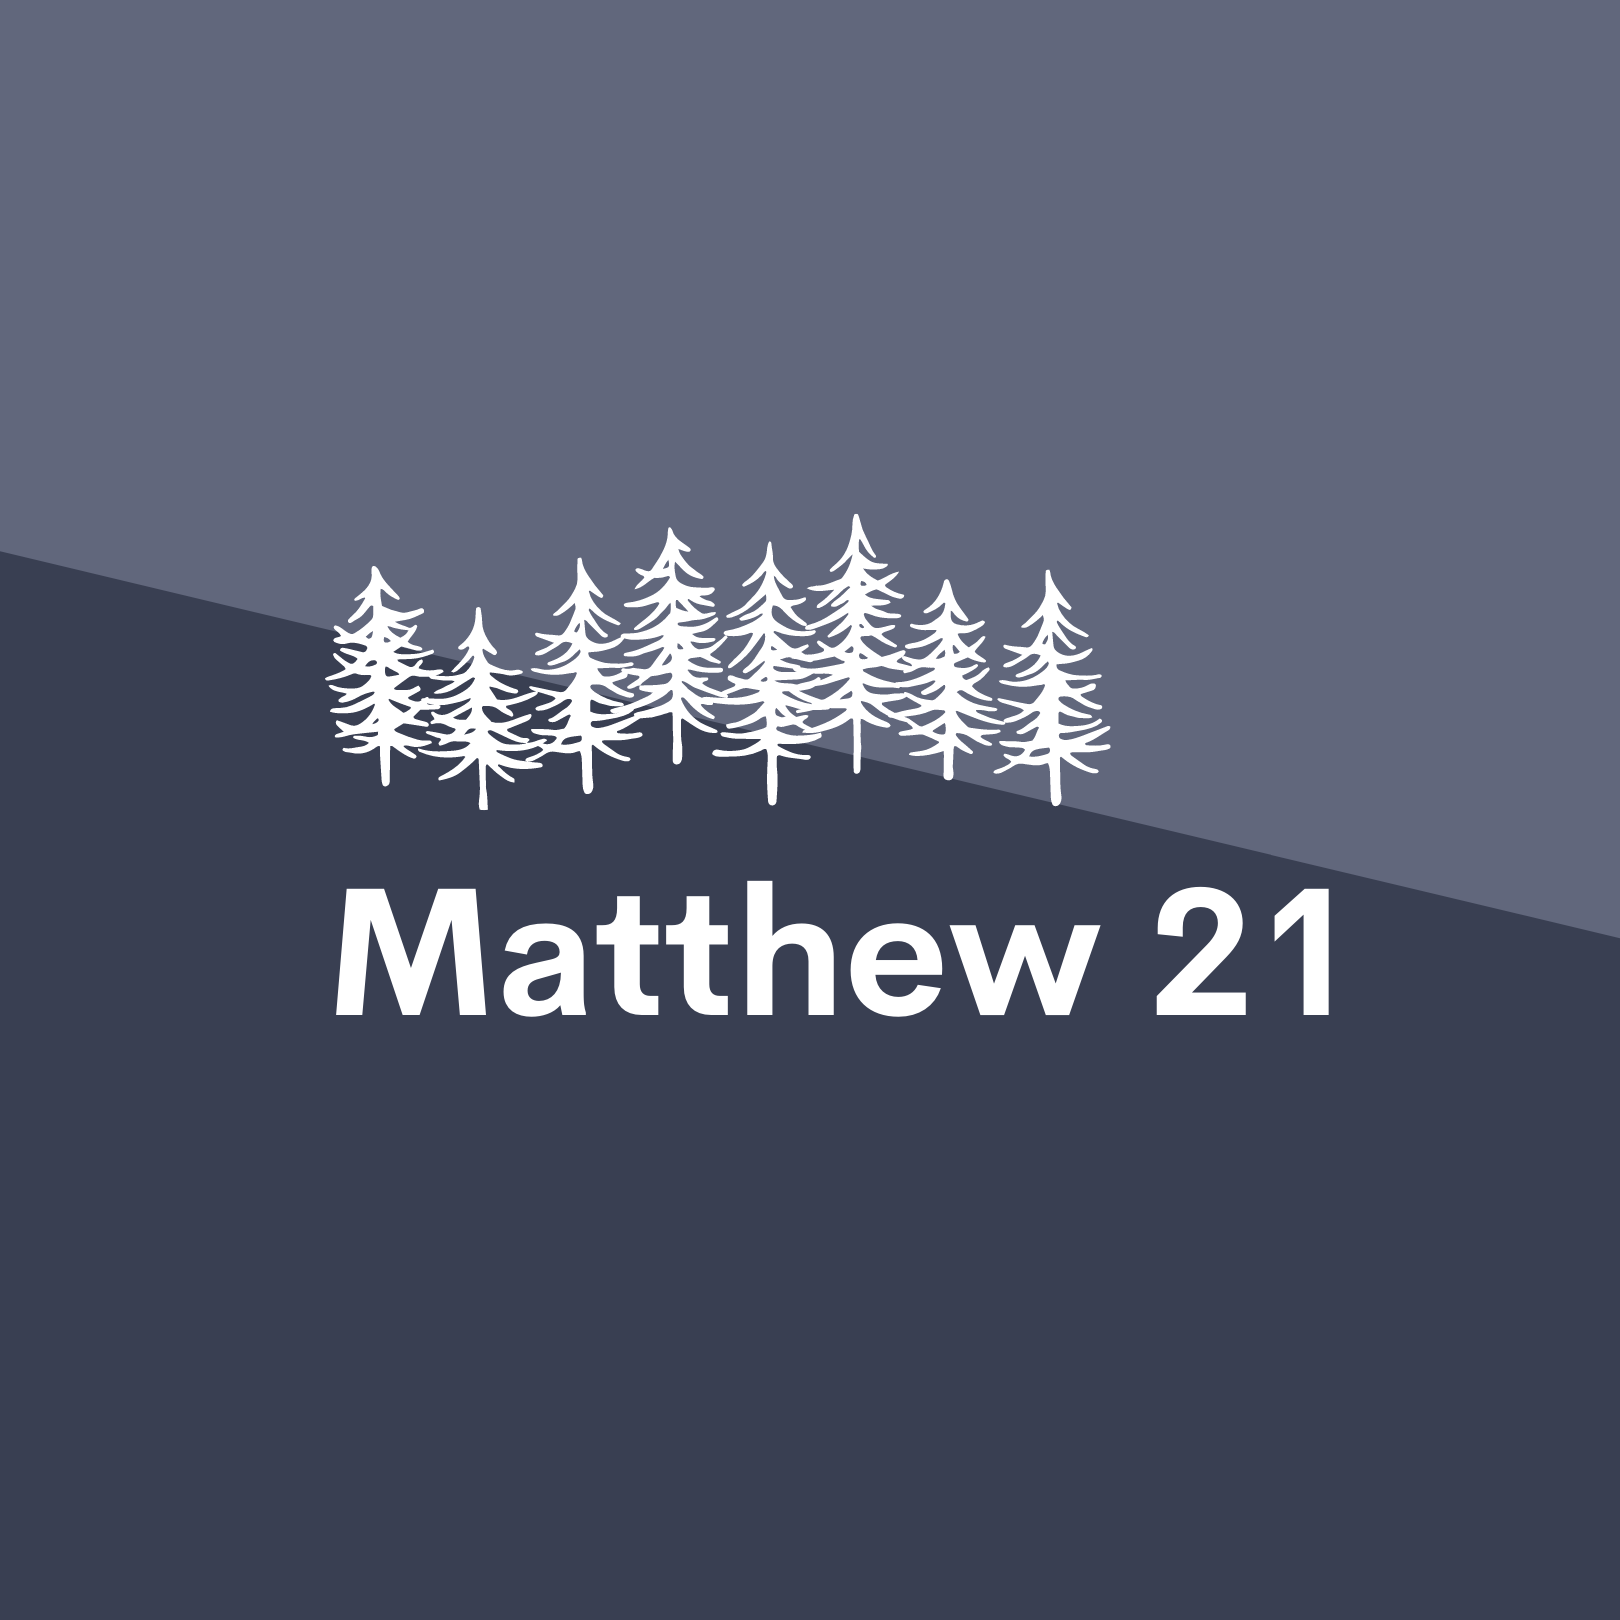 Feb 1: Matthew 21